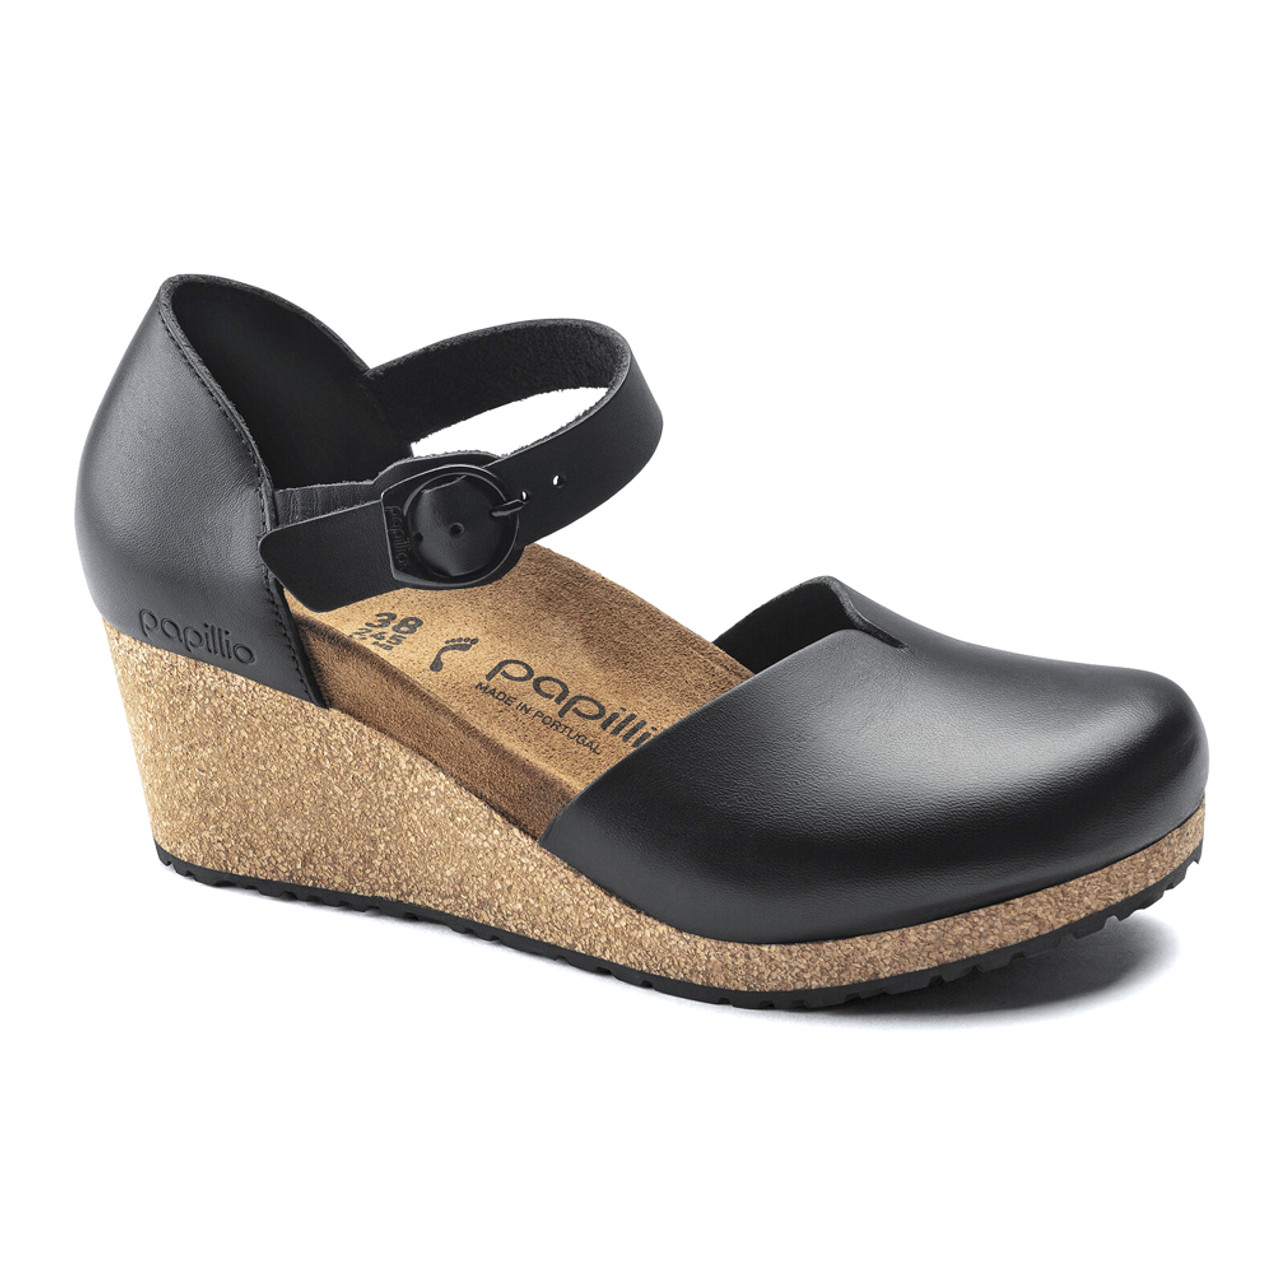 Papillio Women's Wedge Sandal - Black | Discount Birkenstock Ladies Sandals & More - Shoolu.com | Shoolu.com